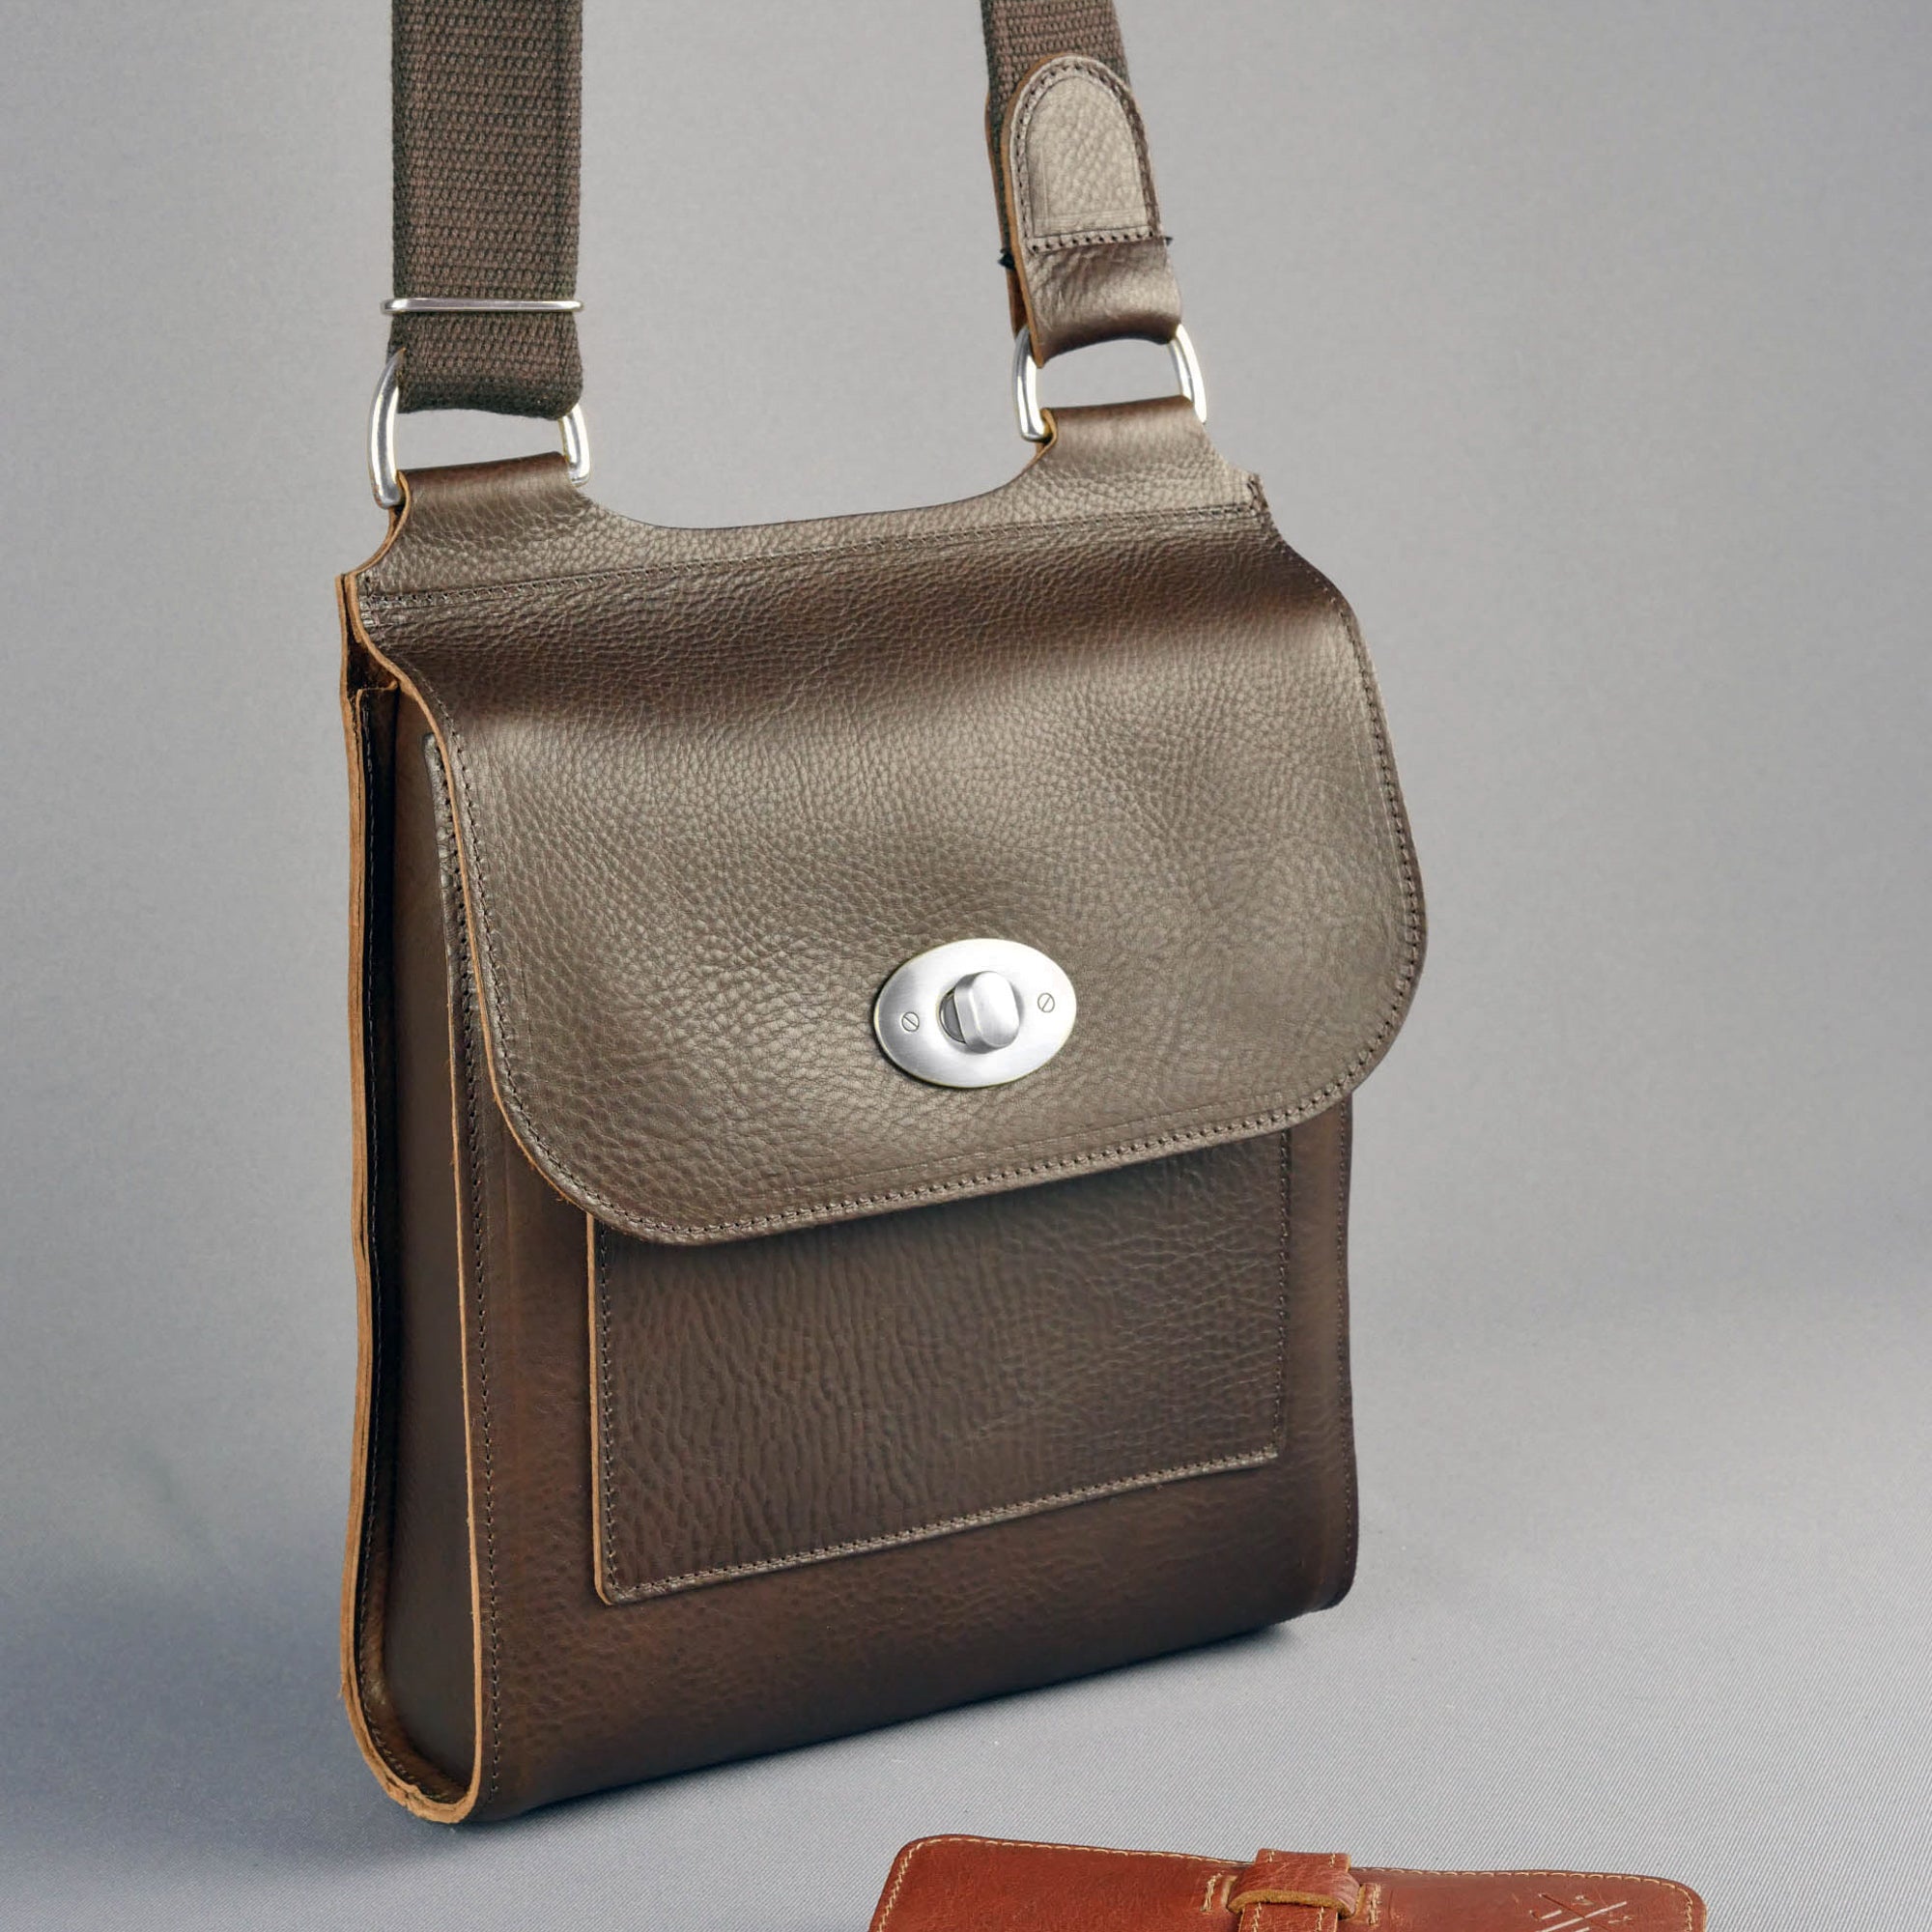 Brown Leather Turnlock Shoulder Bag